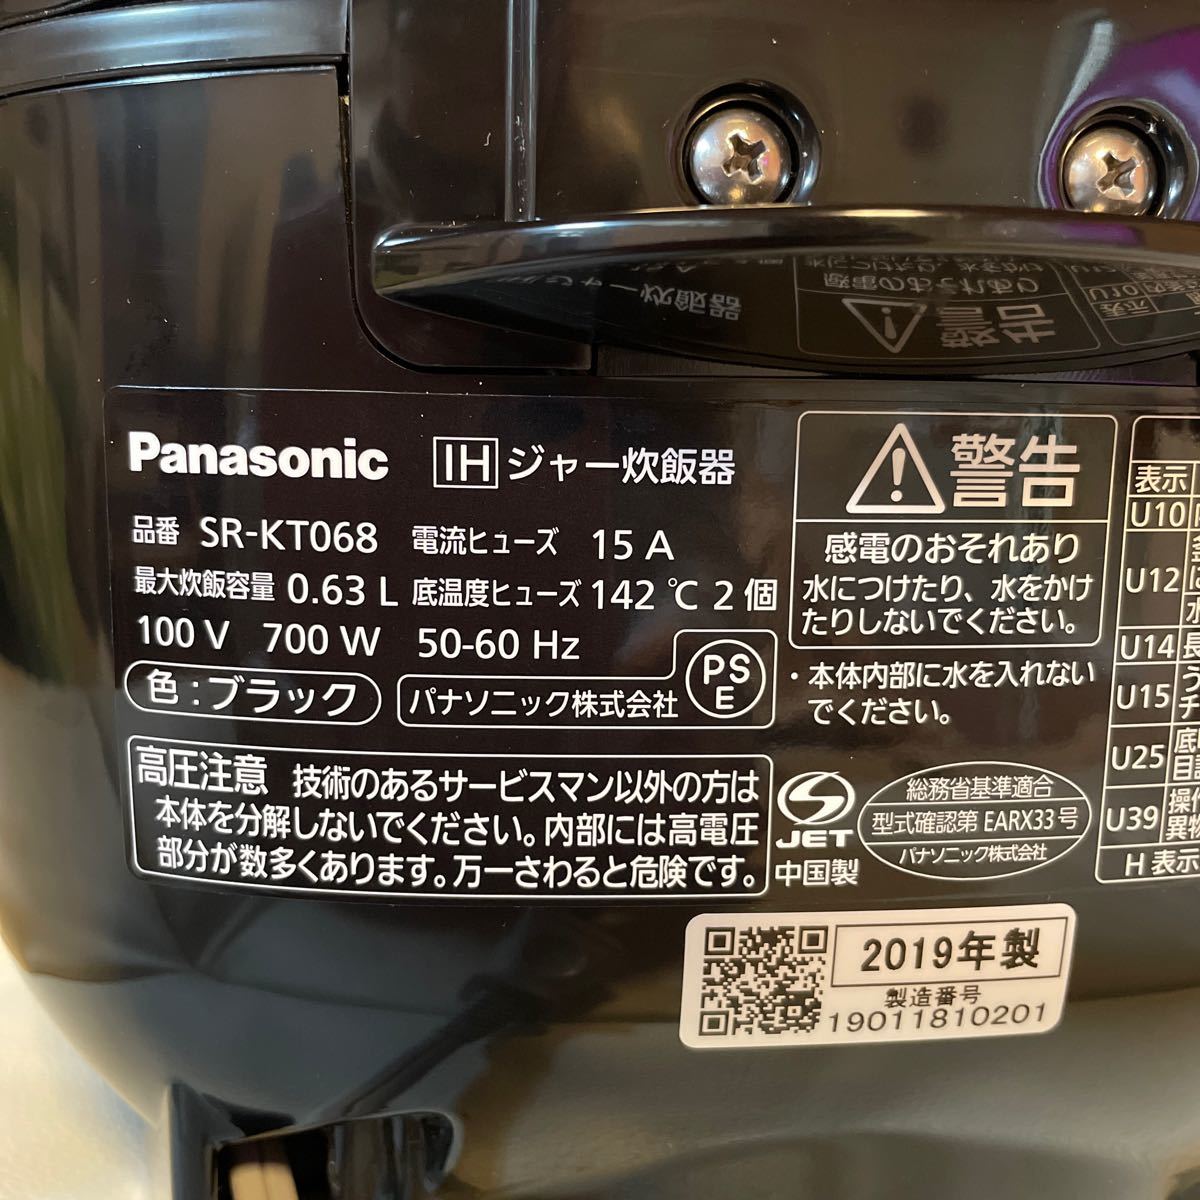 Panasonic炊飯器3合炊き※美品です。